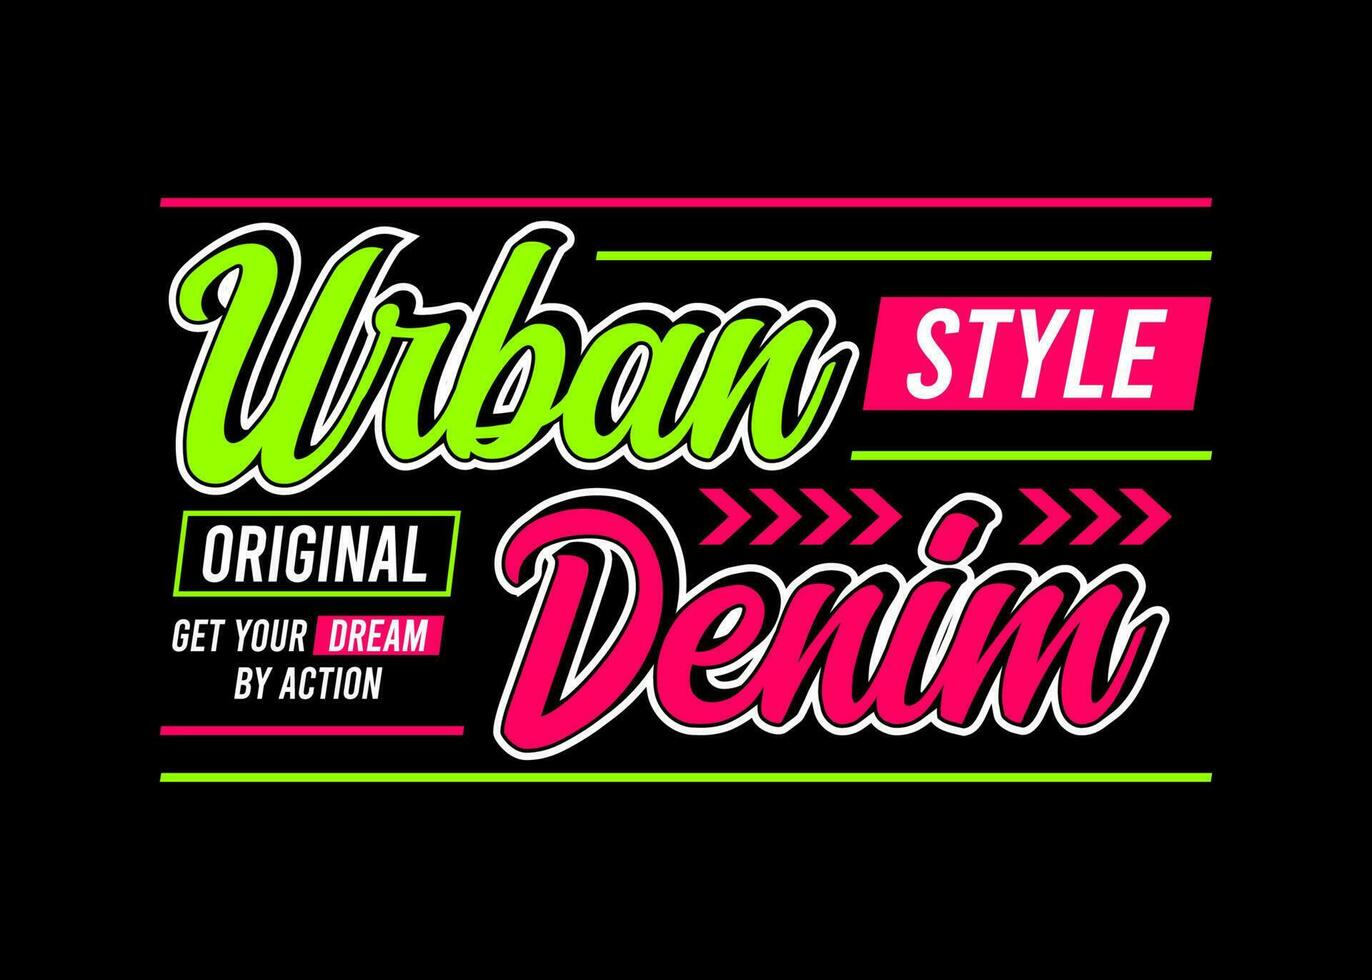 021 Urban Denim typography design, for t-shirt, posters, labels, etc. vector